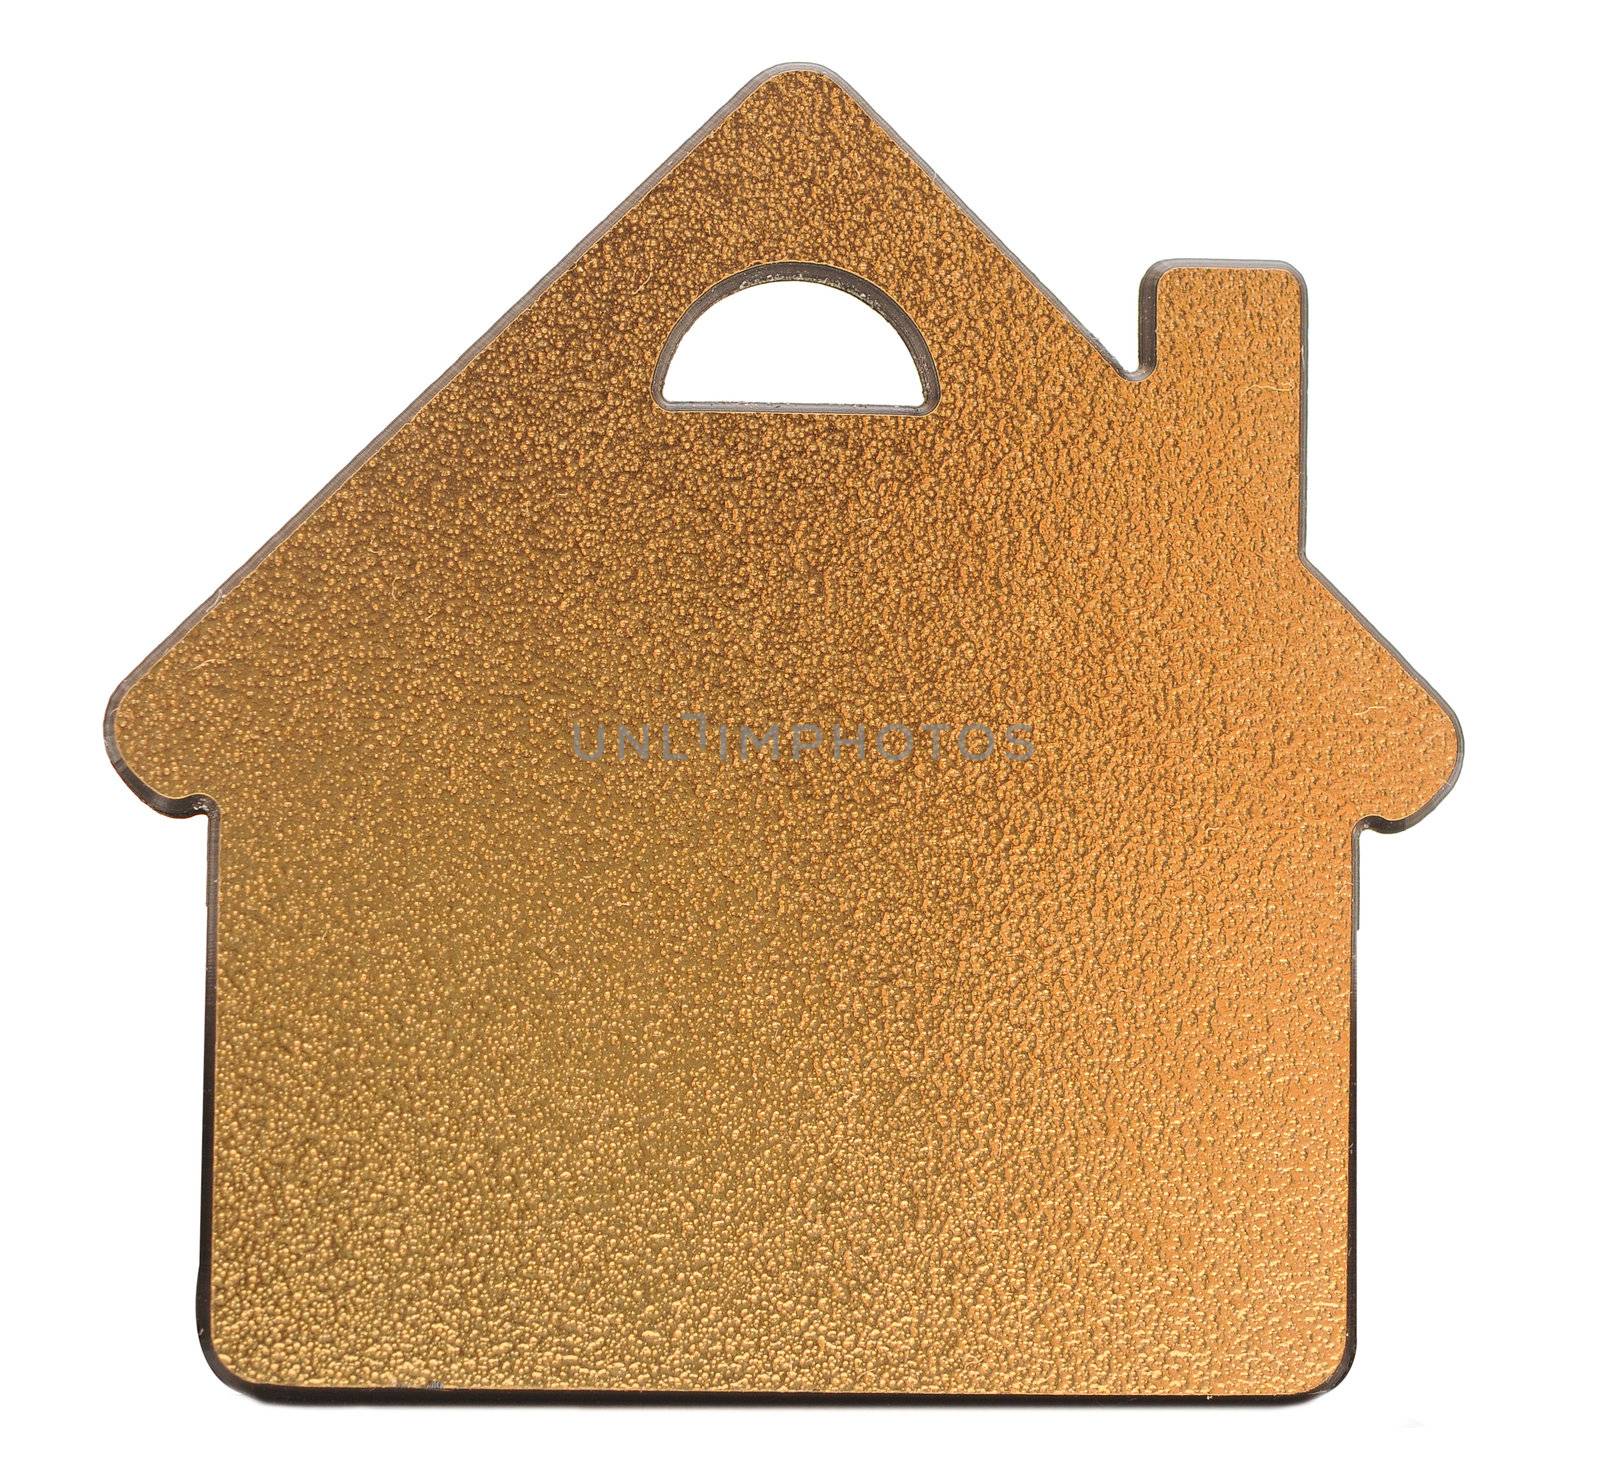 golden metallic house shaped object on white background 